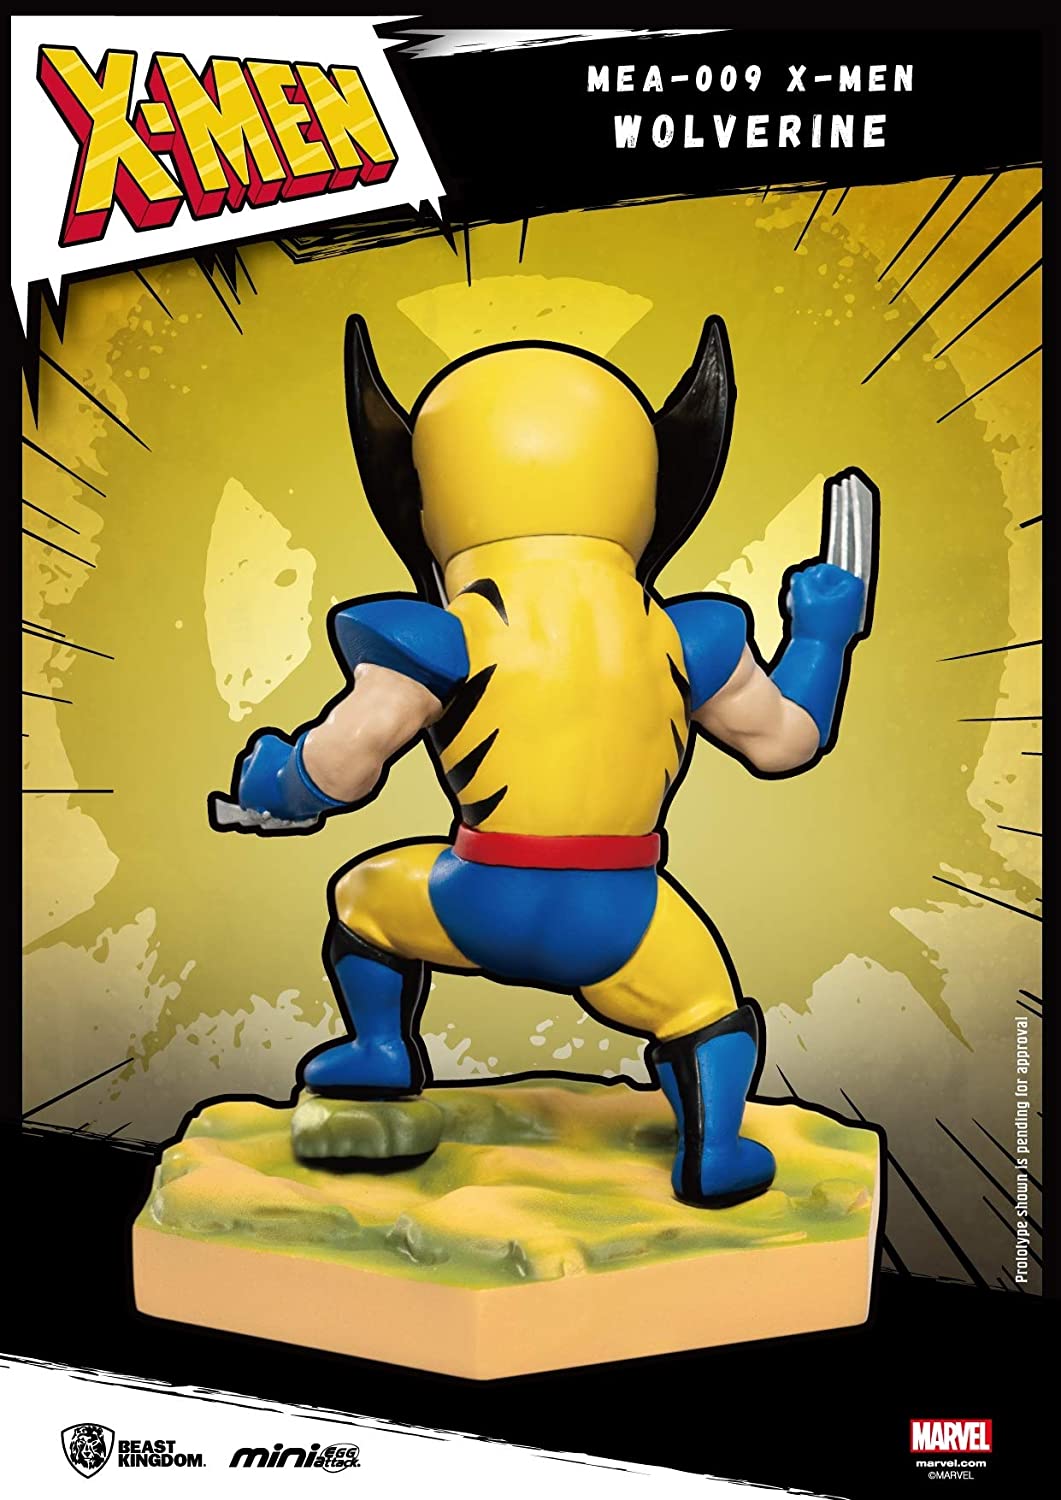 Marvel X-Men MEA-009 Wolverine PX Abb